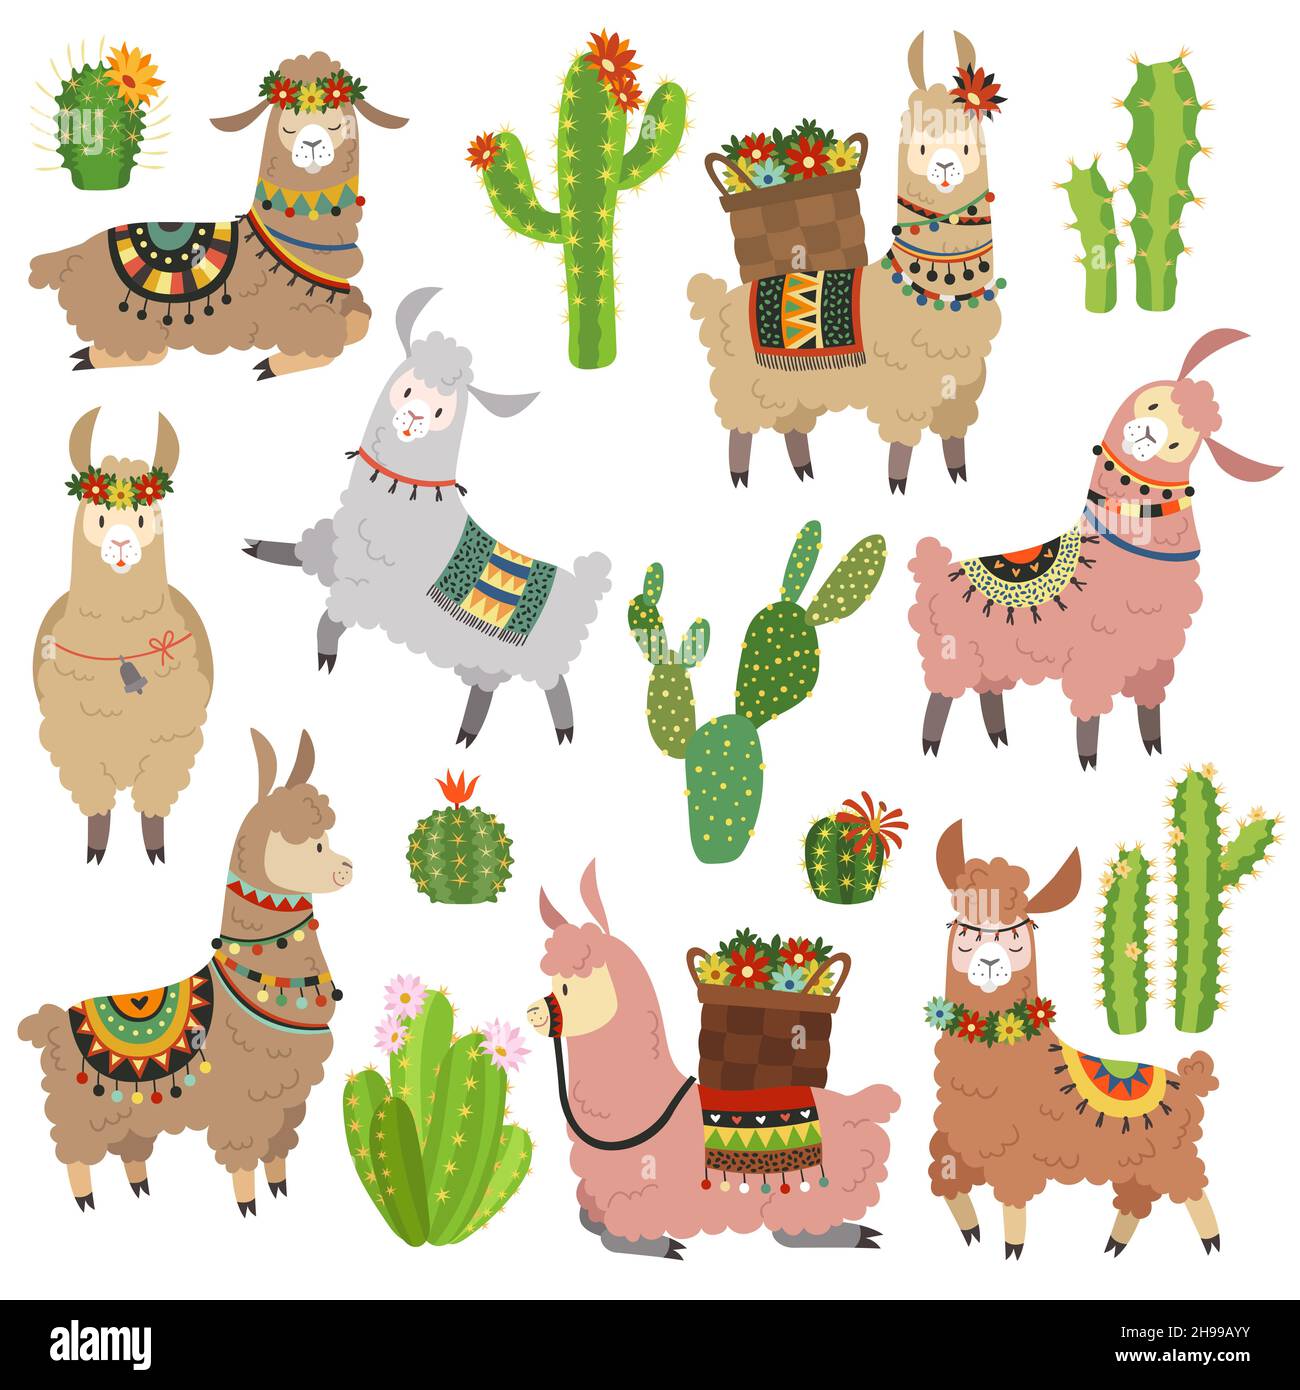 Llama cactus. Chile llamas alpaca and cacti wild lama. Peru camel, girl scrapbook kids funny elements cartoon vector set Stock Vector